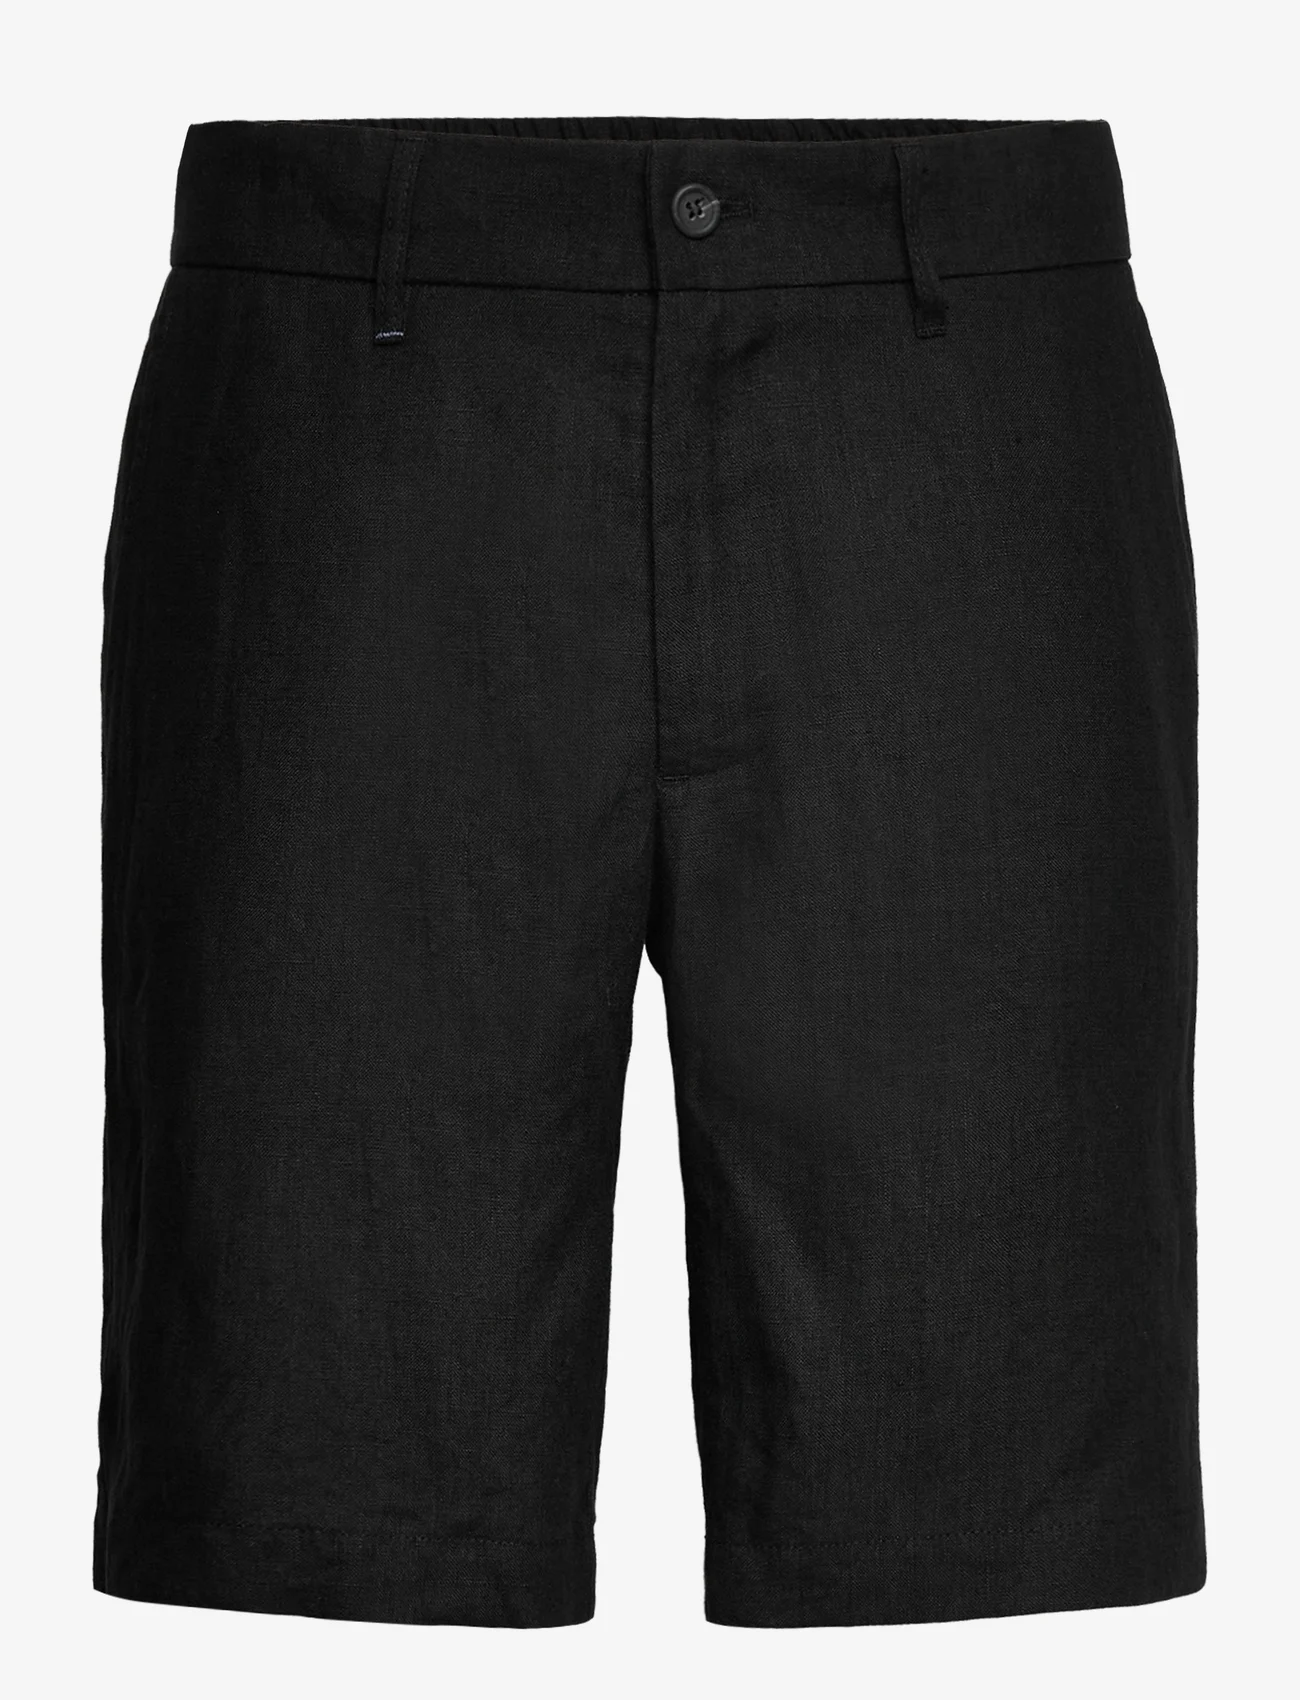 FRENN - Teppo Linen Shorts - nordic style - black - 1